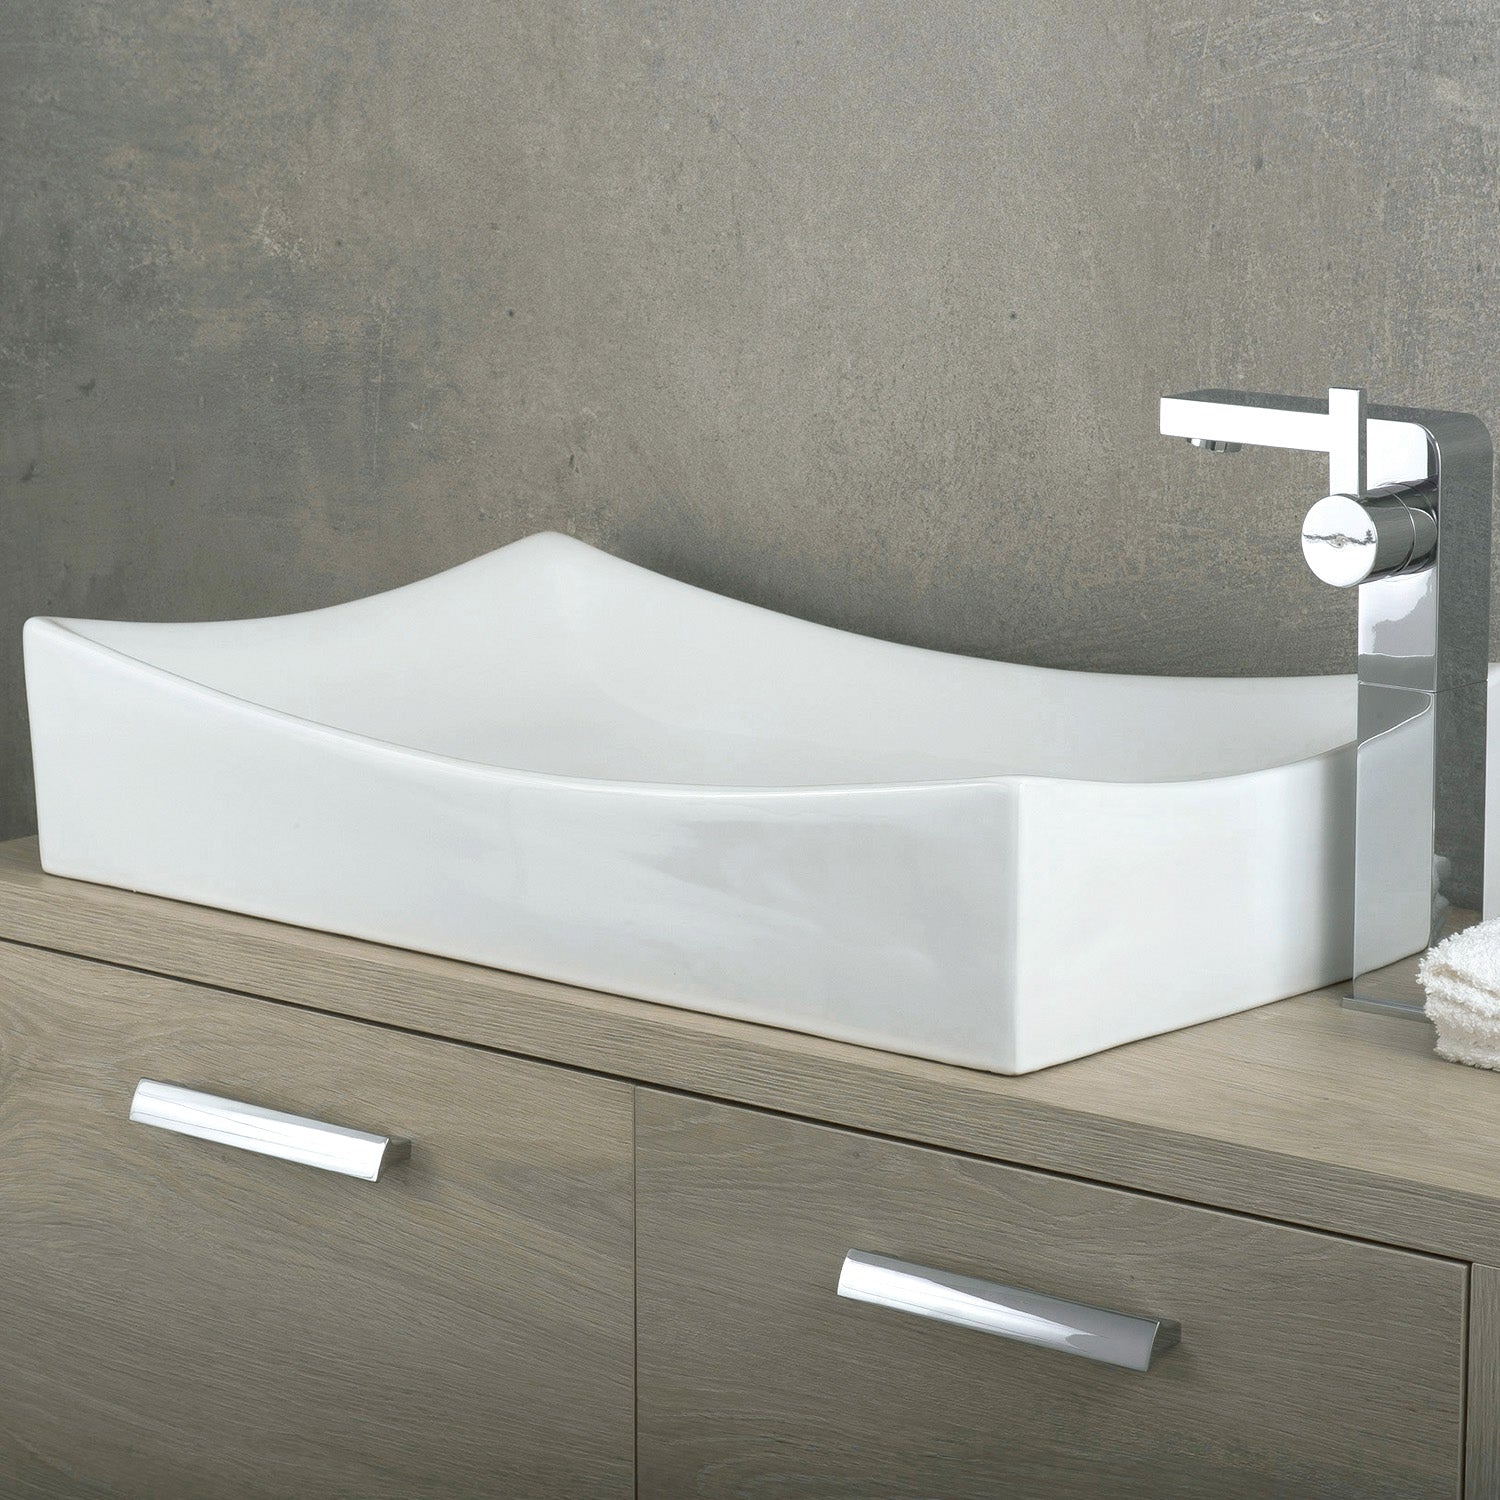 DAX Ceramic Rectangle Single Bowl Bathroom Vessel Sink, White Finish, 25-3/4 x 15-1/2 x 5-1/4 Inches (BSN-280B)